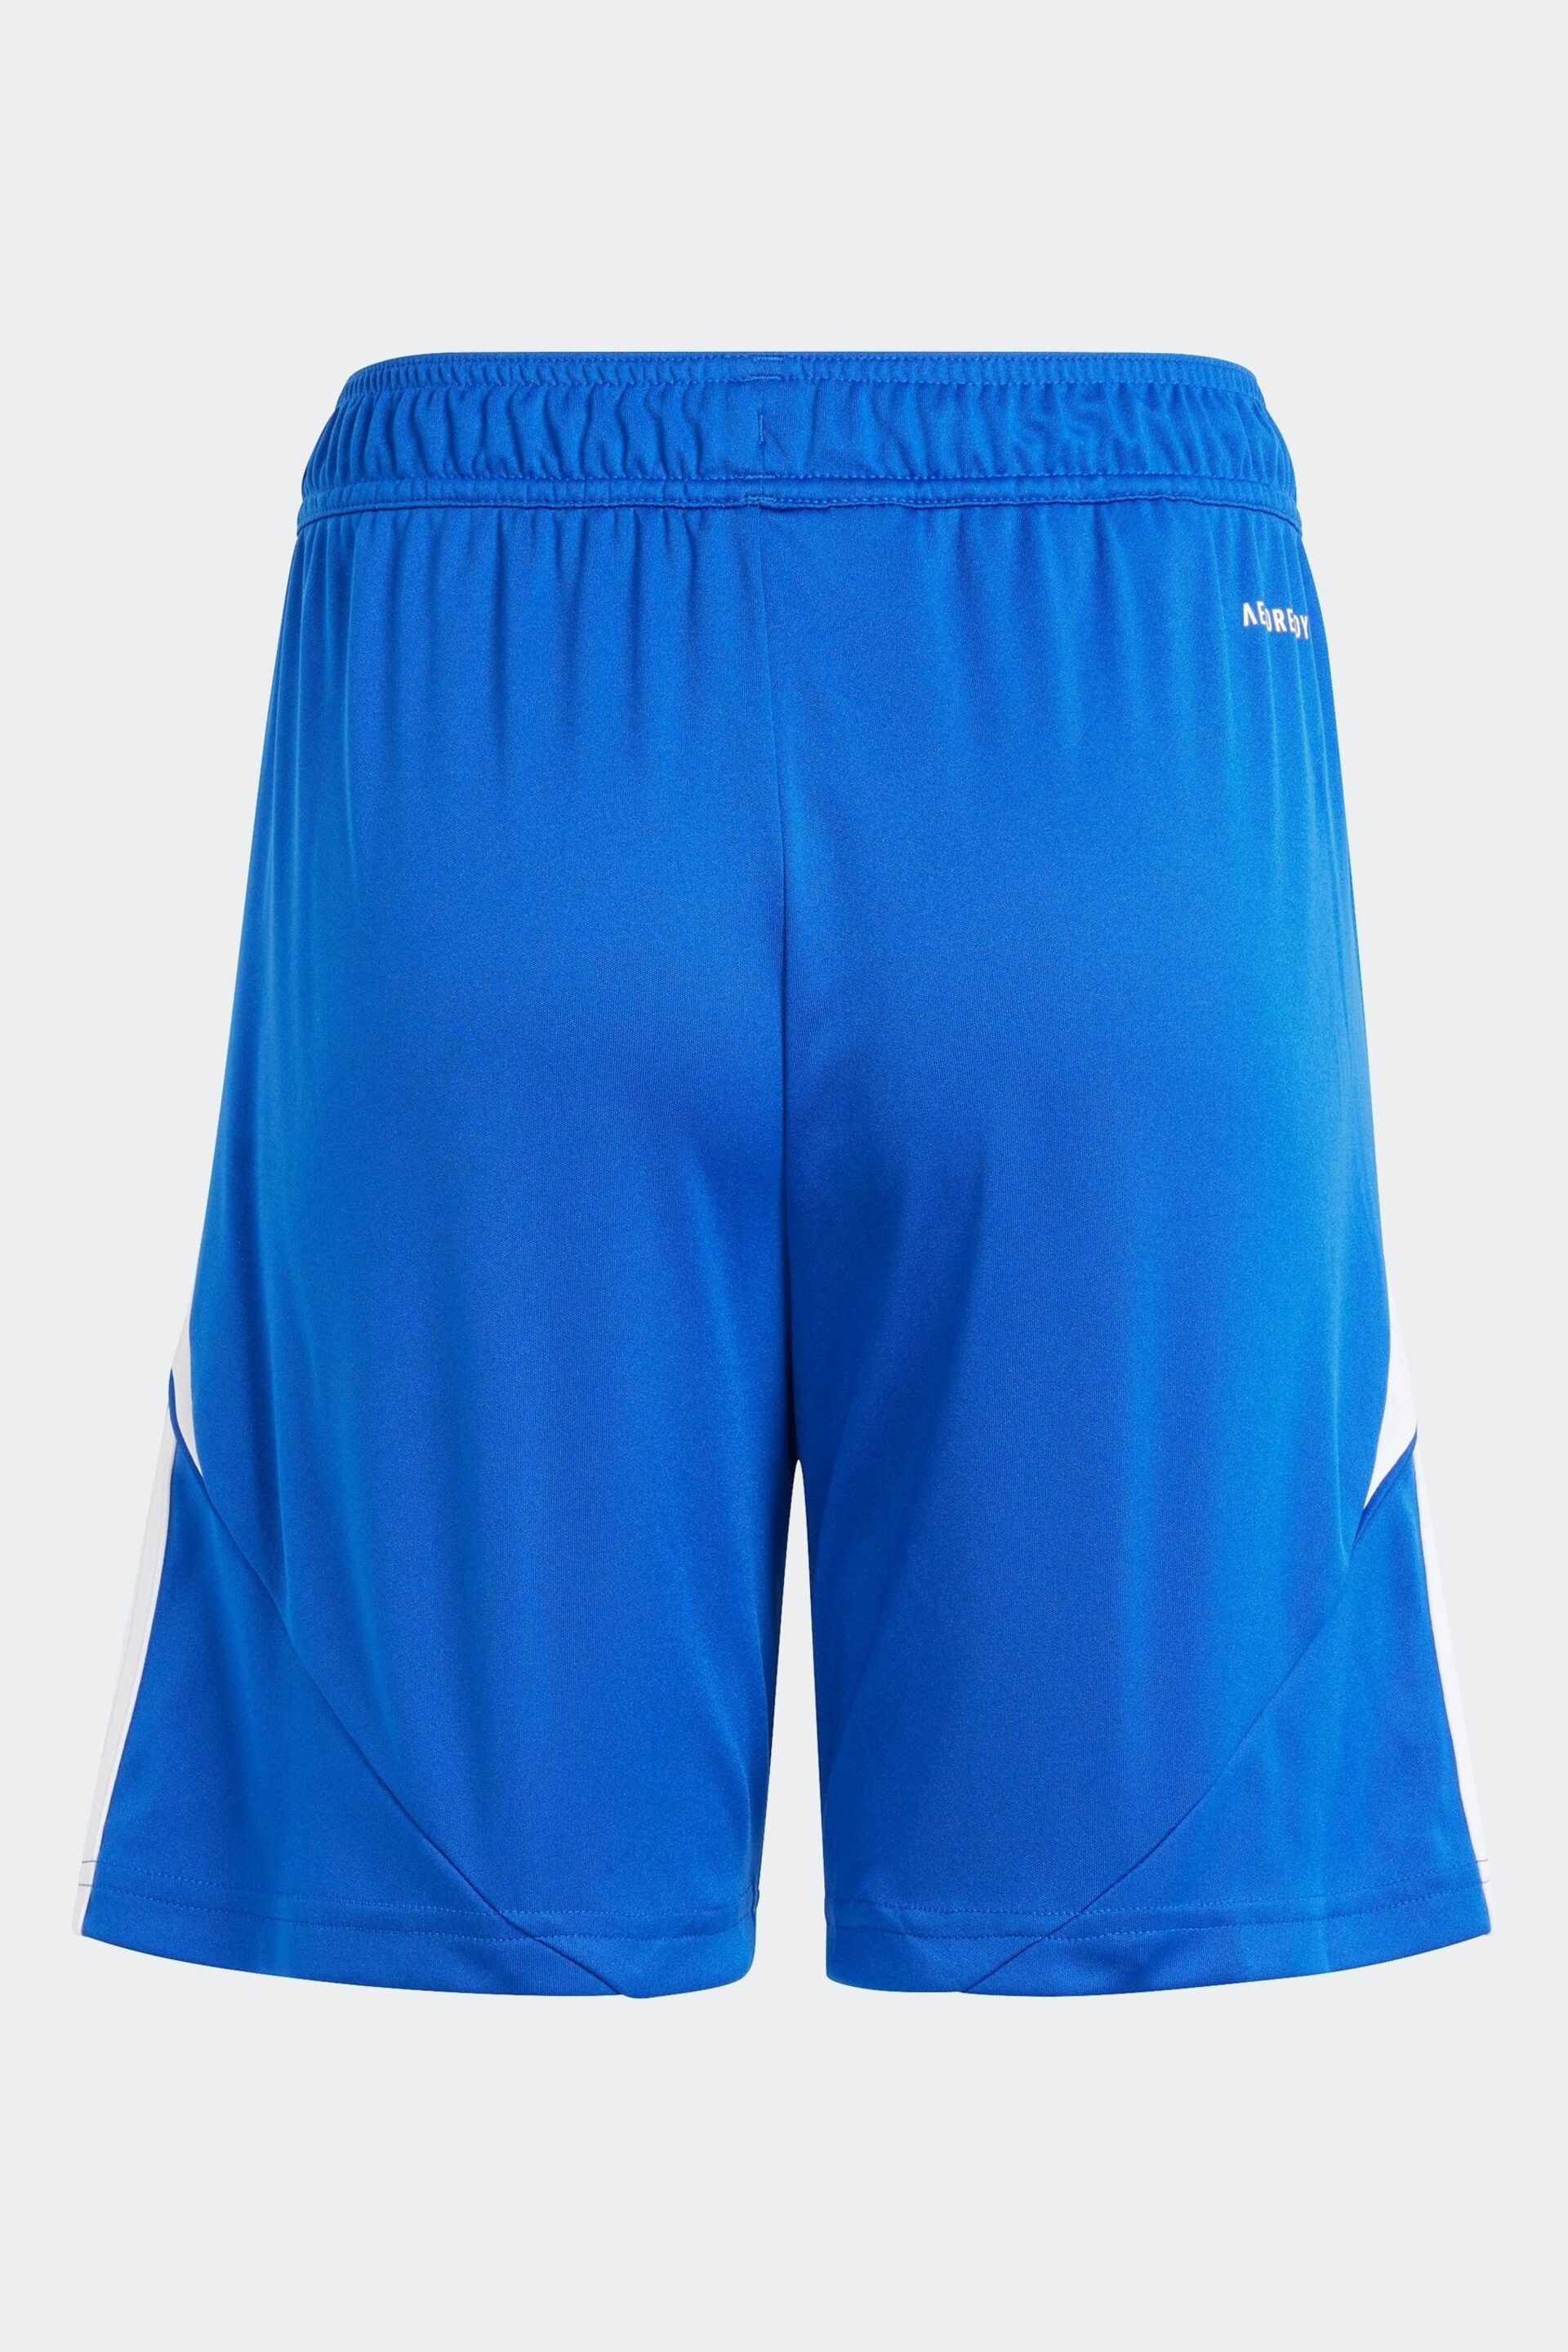 adidas Bright Blue Tiro 24 Shorts - Image 6 of 9